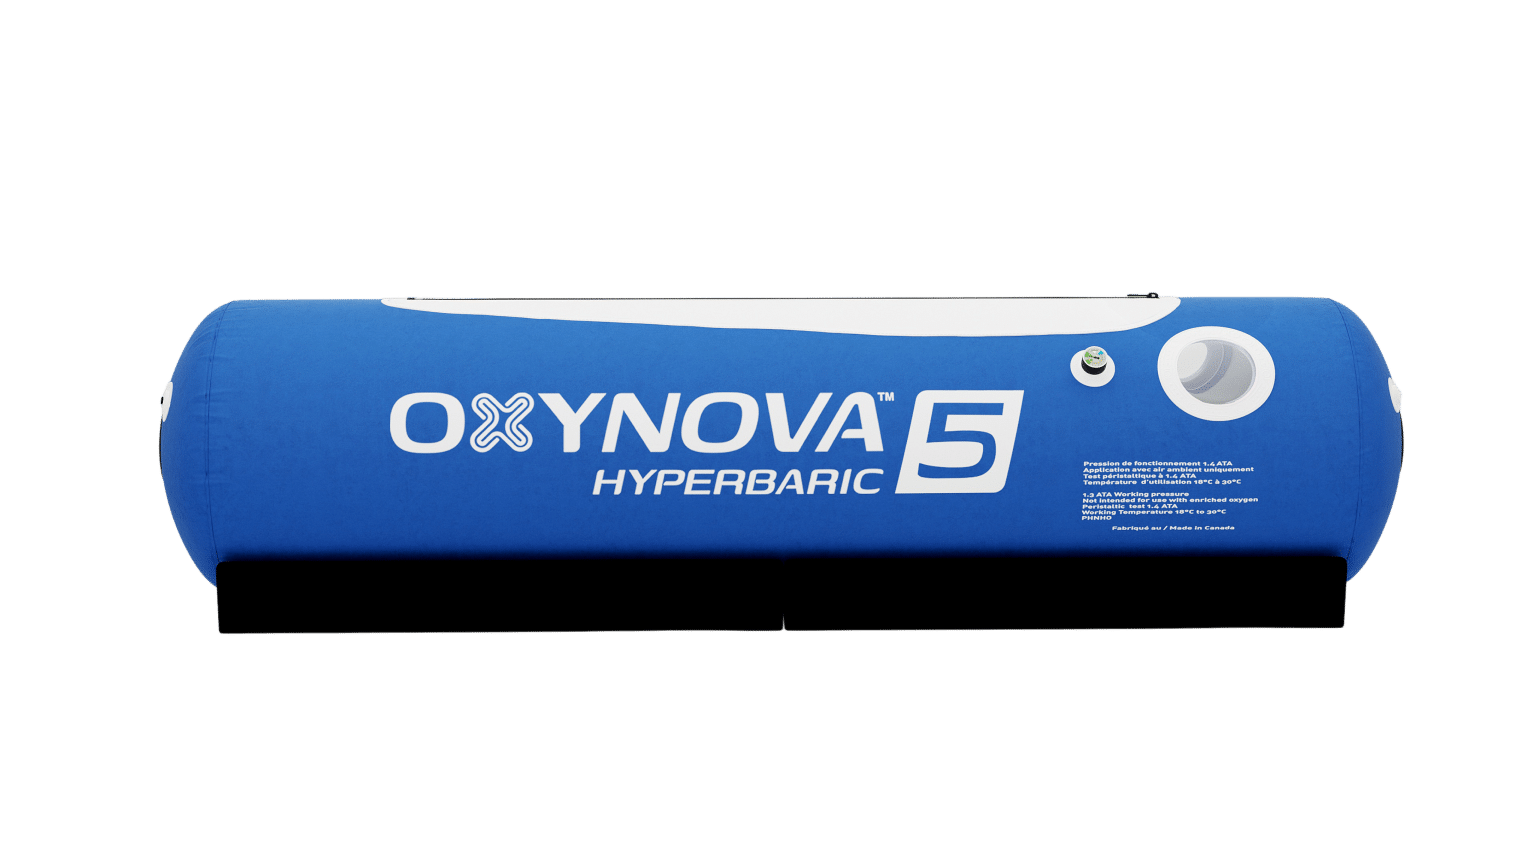 OxyNova 5